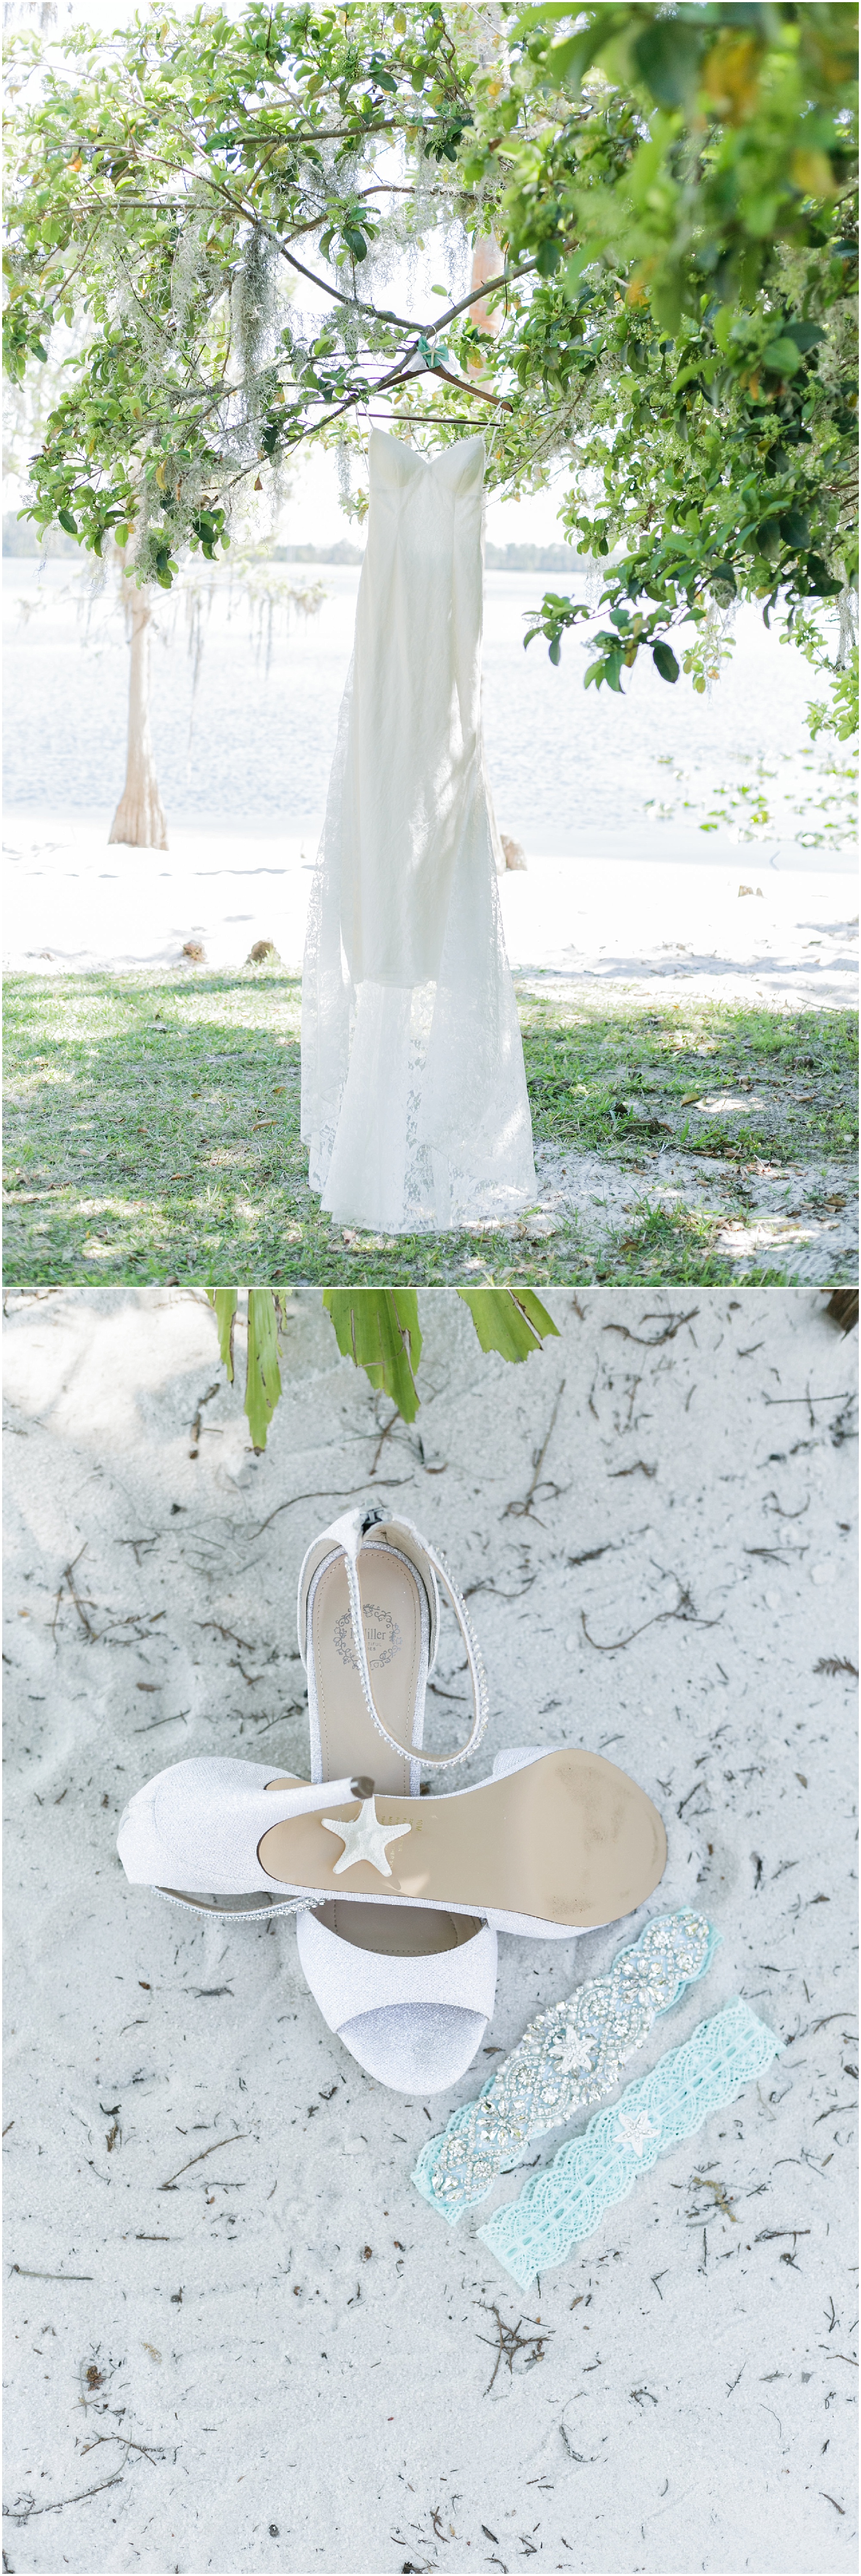 Paradise wedding dress and shoes.